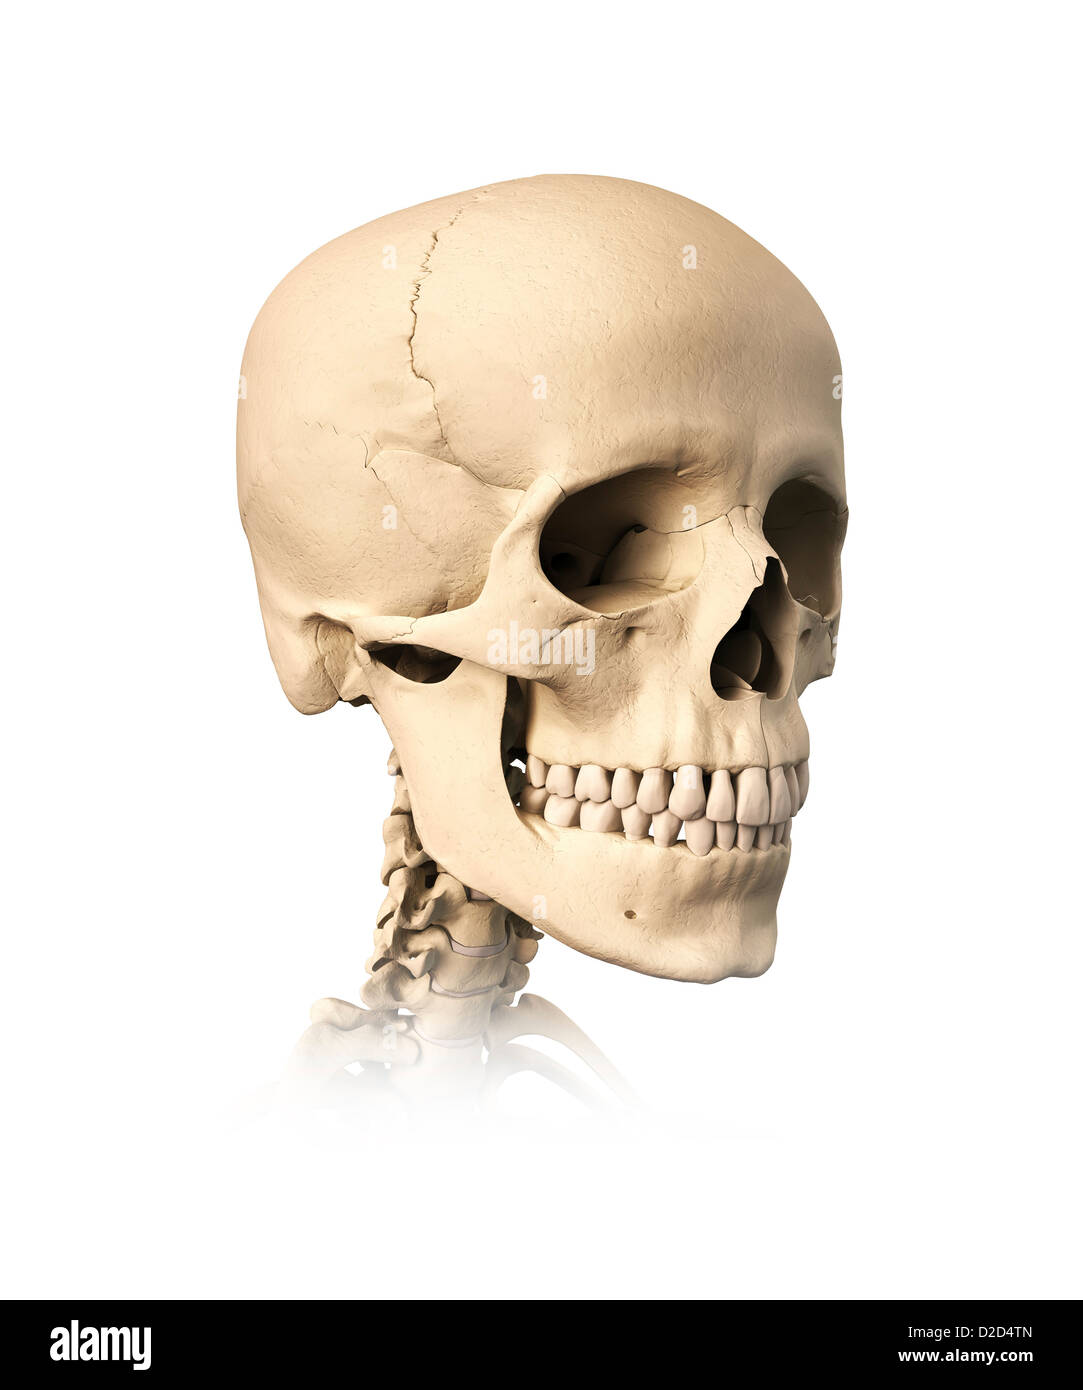 Human skull computer artwork Stock Photo